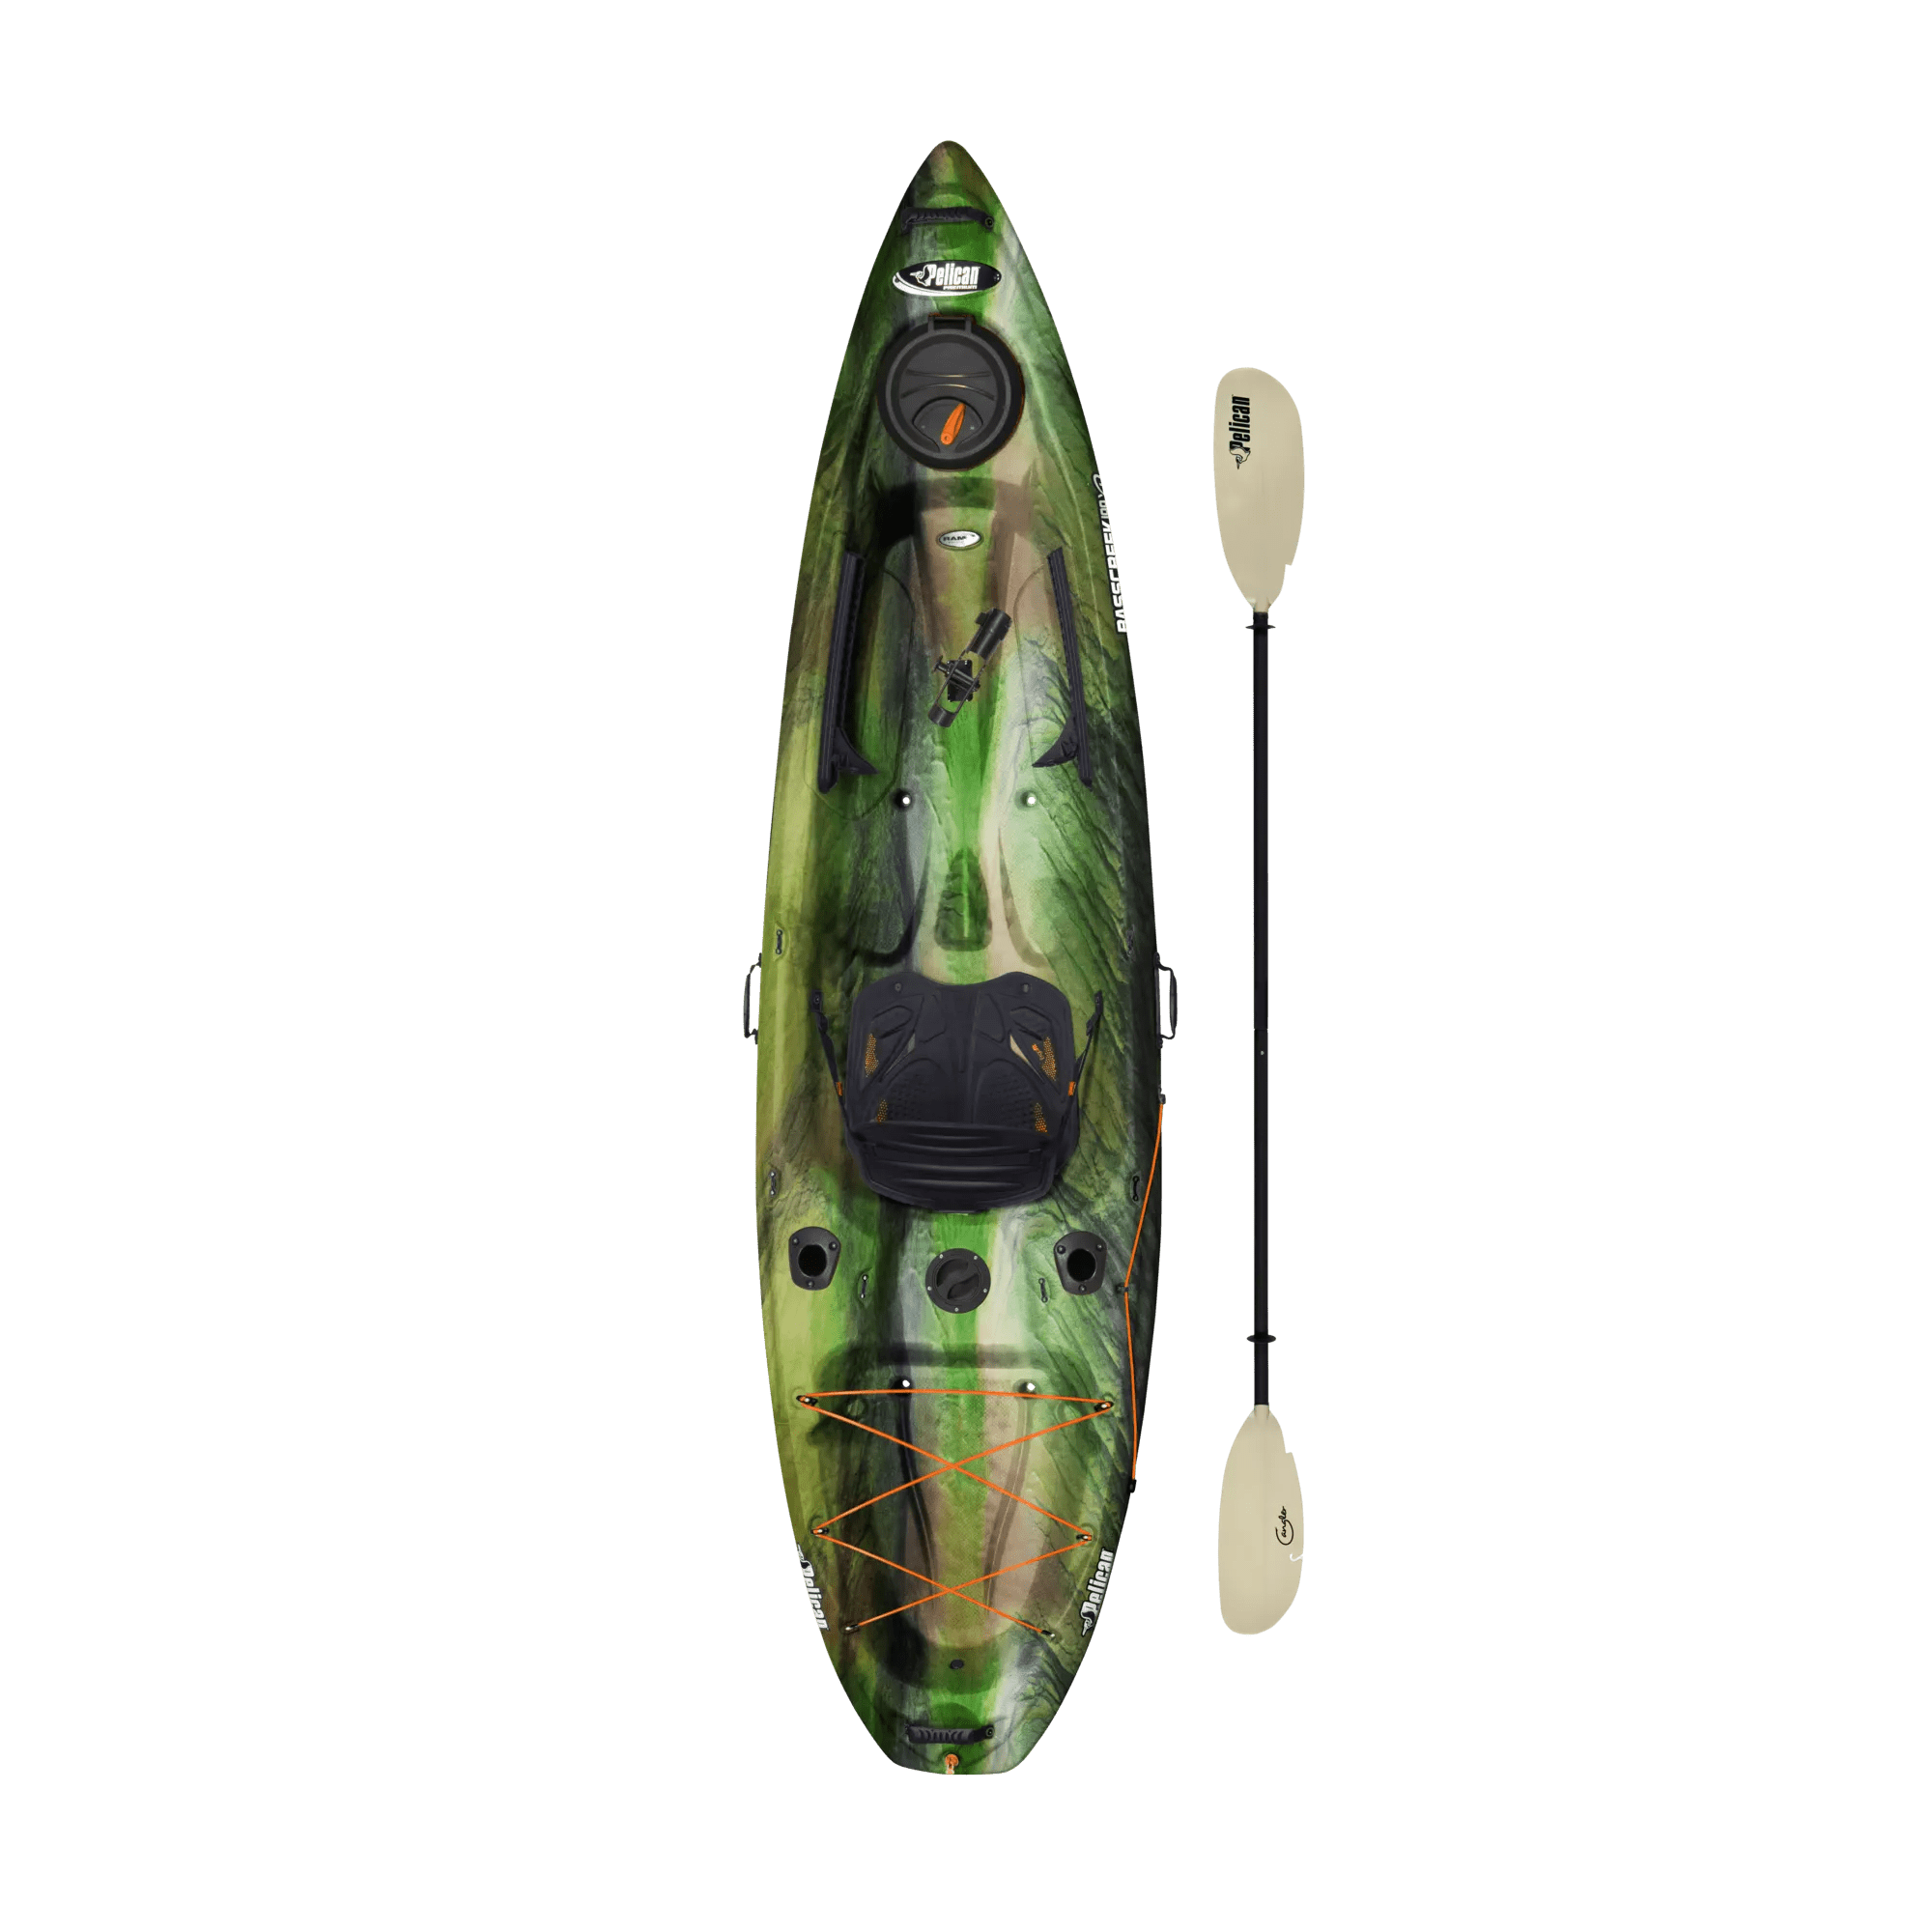 PELICAN - Basscreek 100XP Angler Fishing Kayak - Olive - KWP10P100-00 - TOP